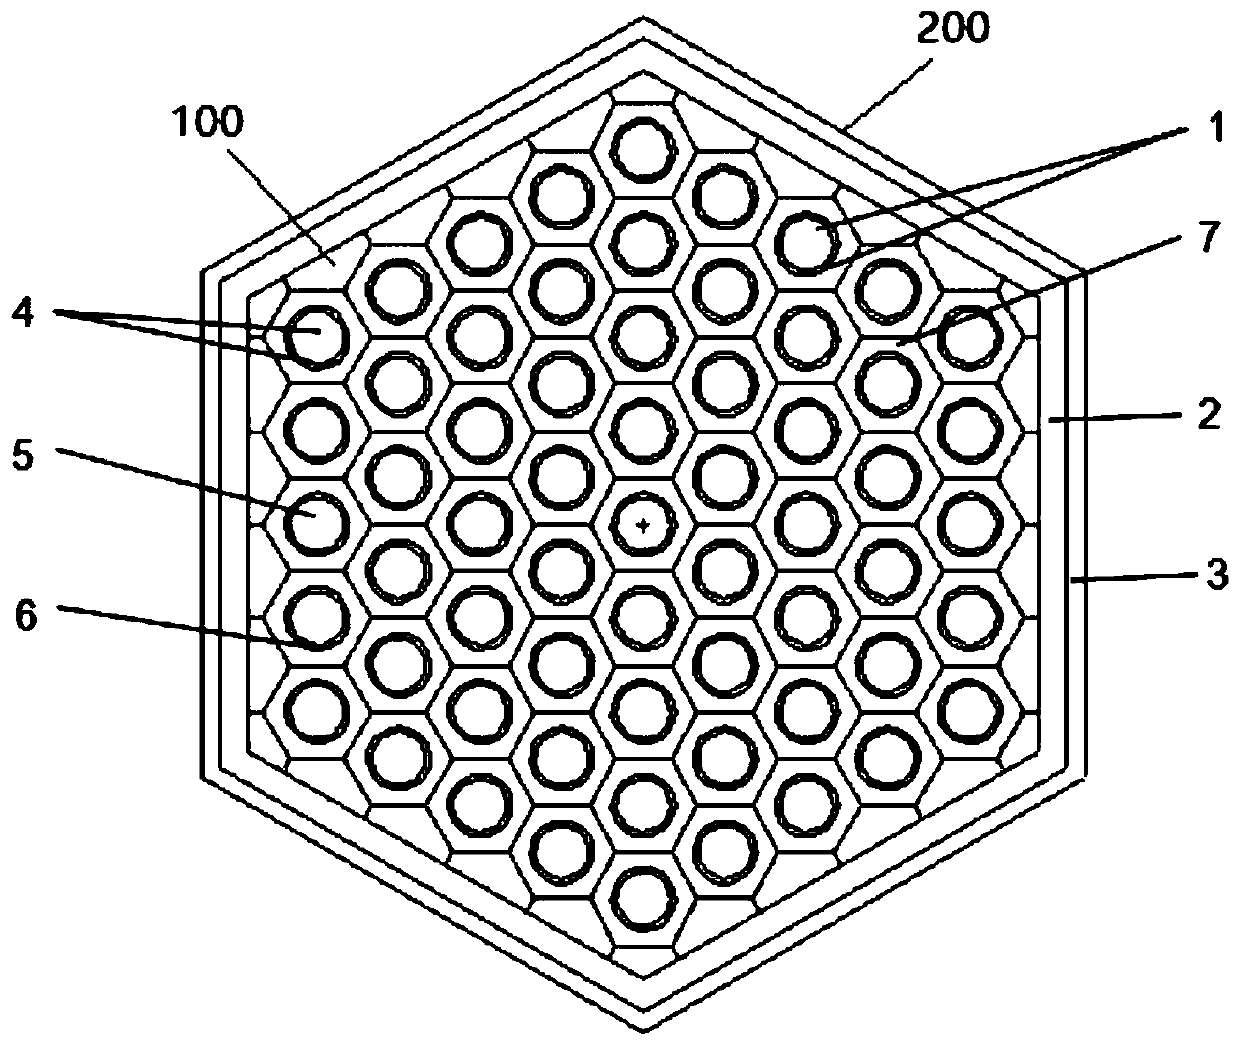 A Design Method for Hexagonal Accelerator-Driven Subcritical Reactor Fuel Assembly